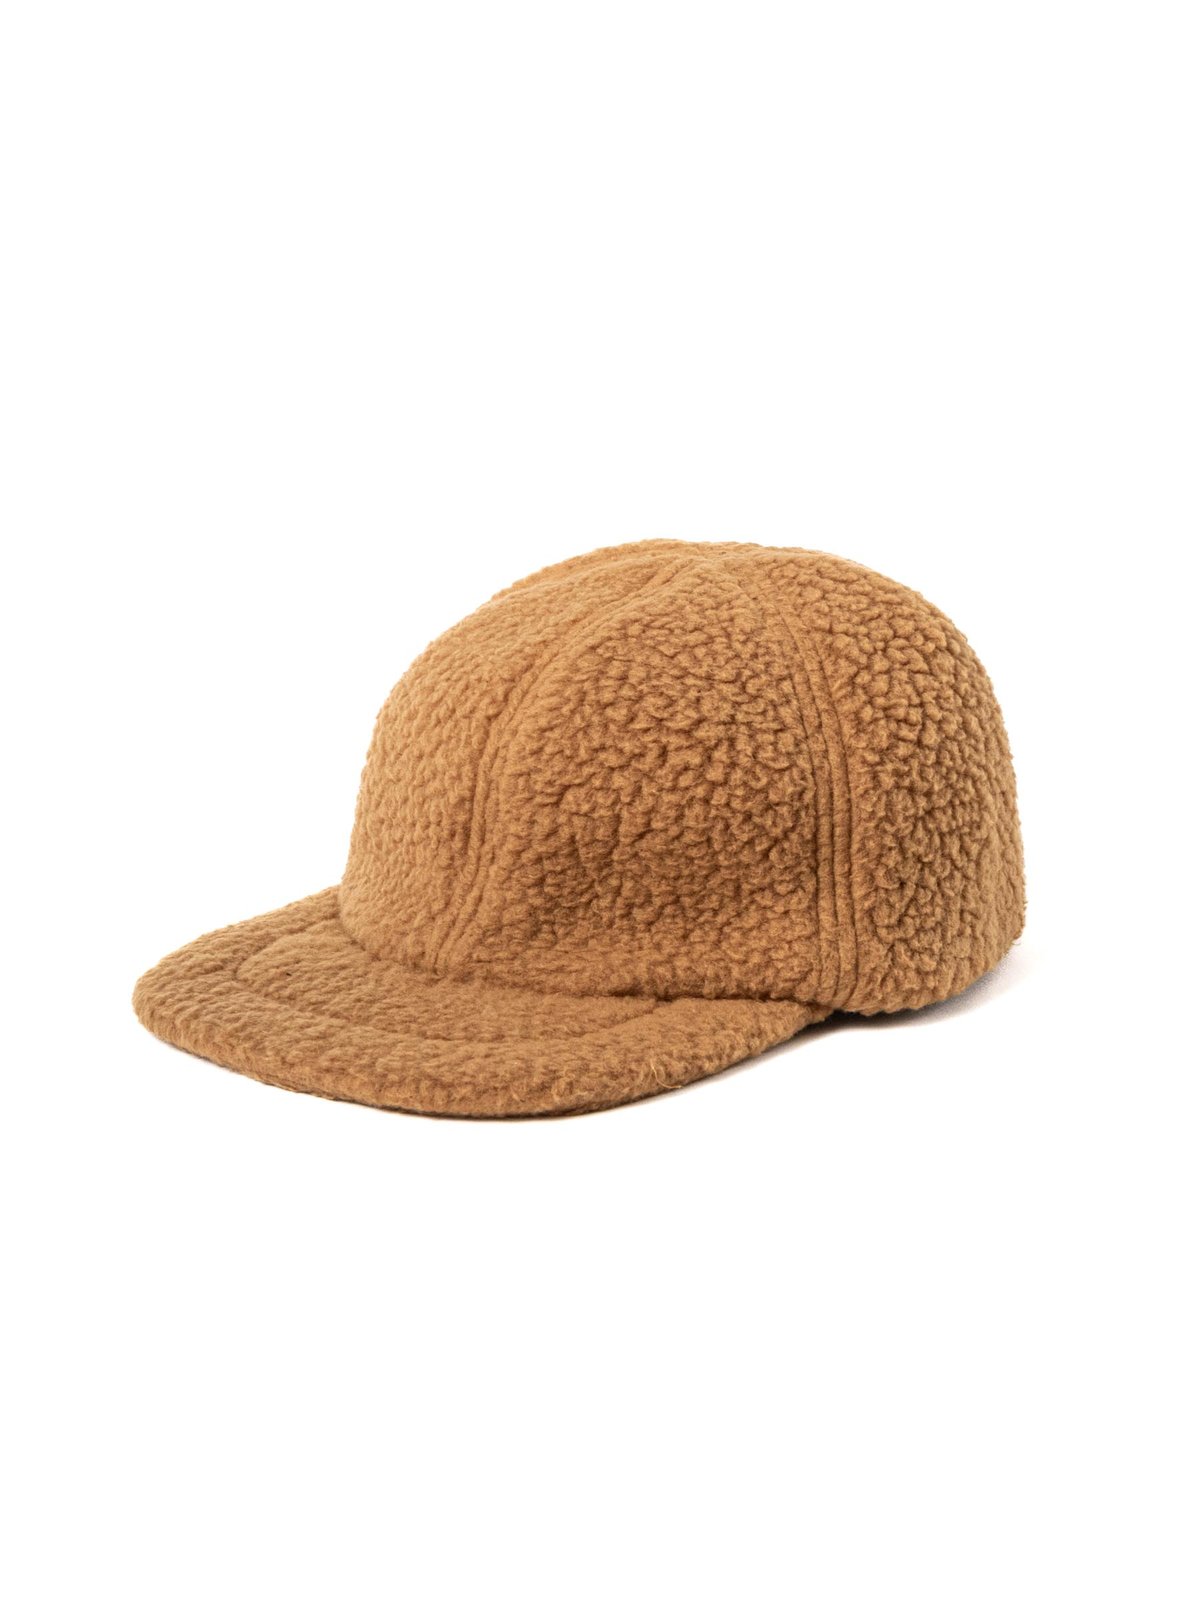 THERMAL BOA FLEECE CAP BROWN - Image 1